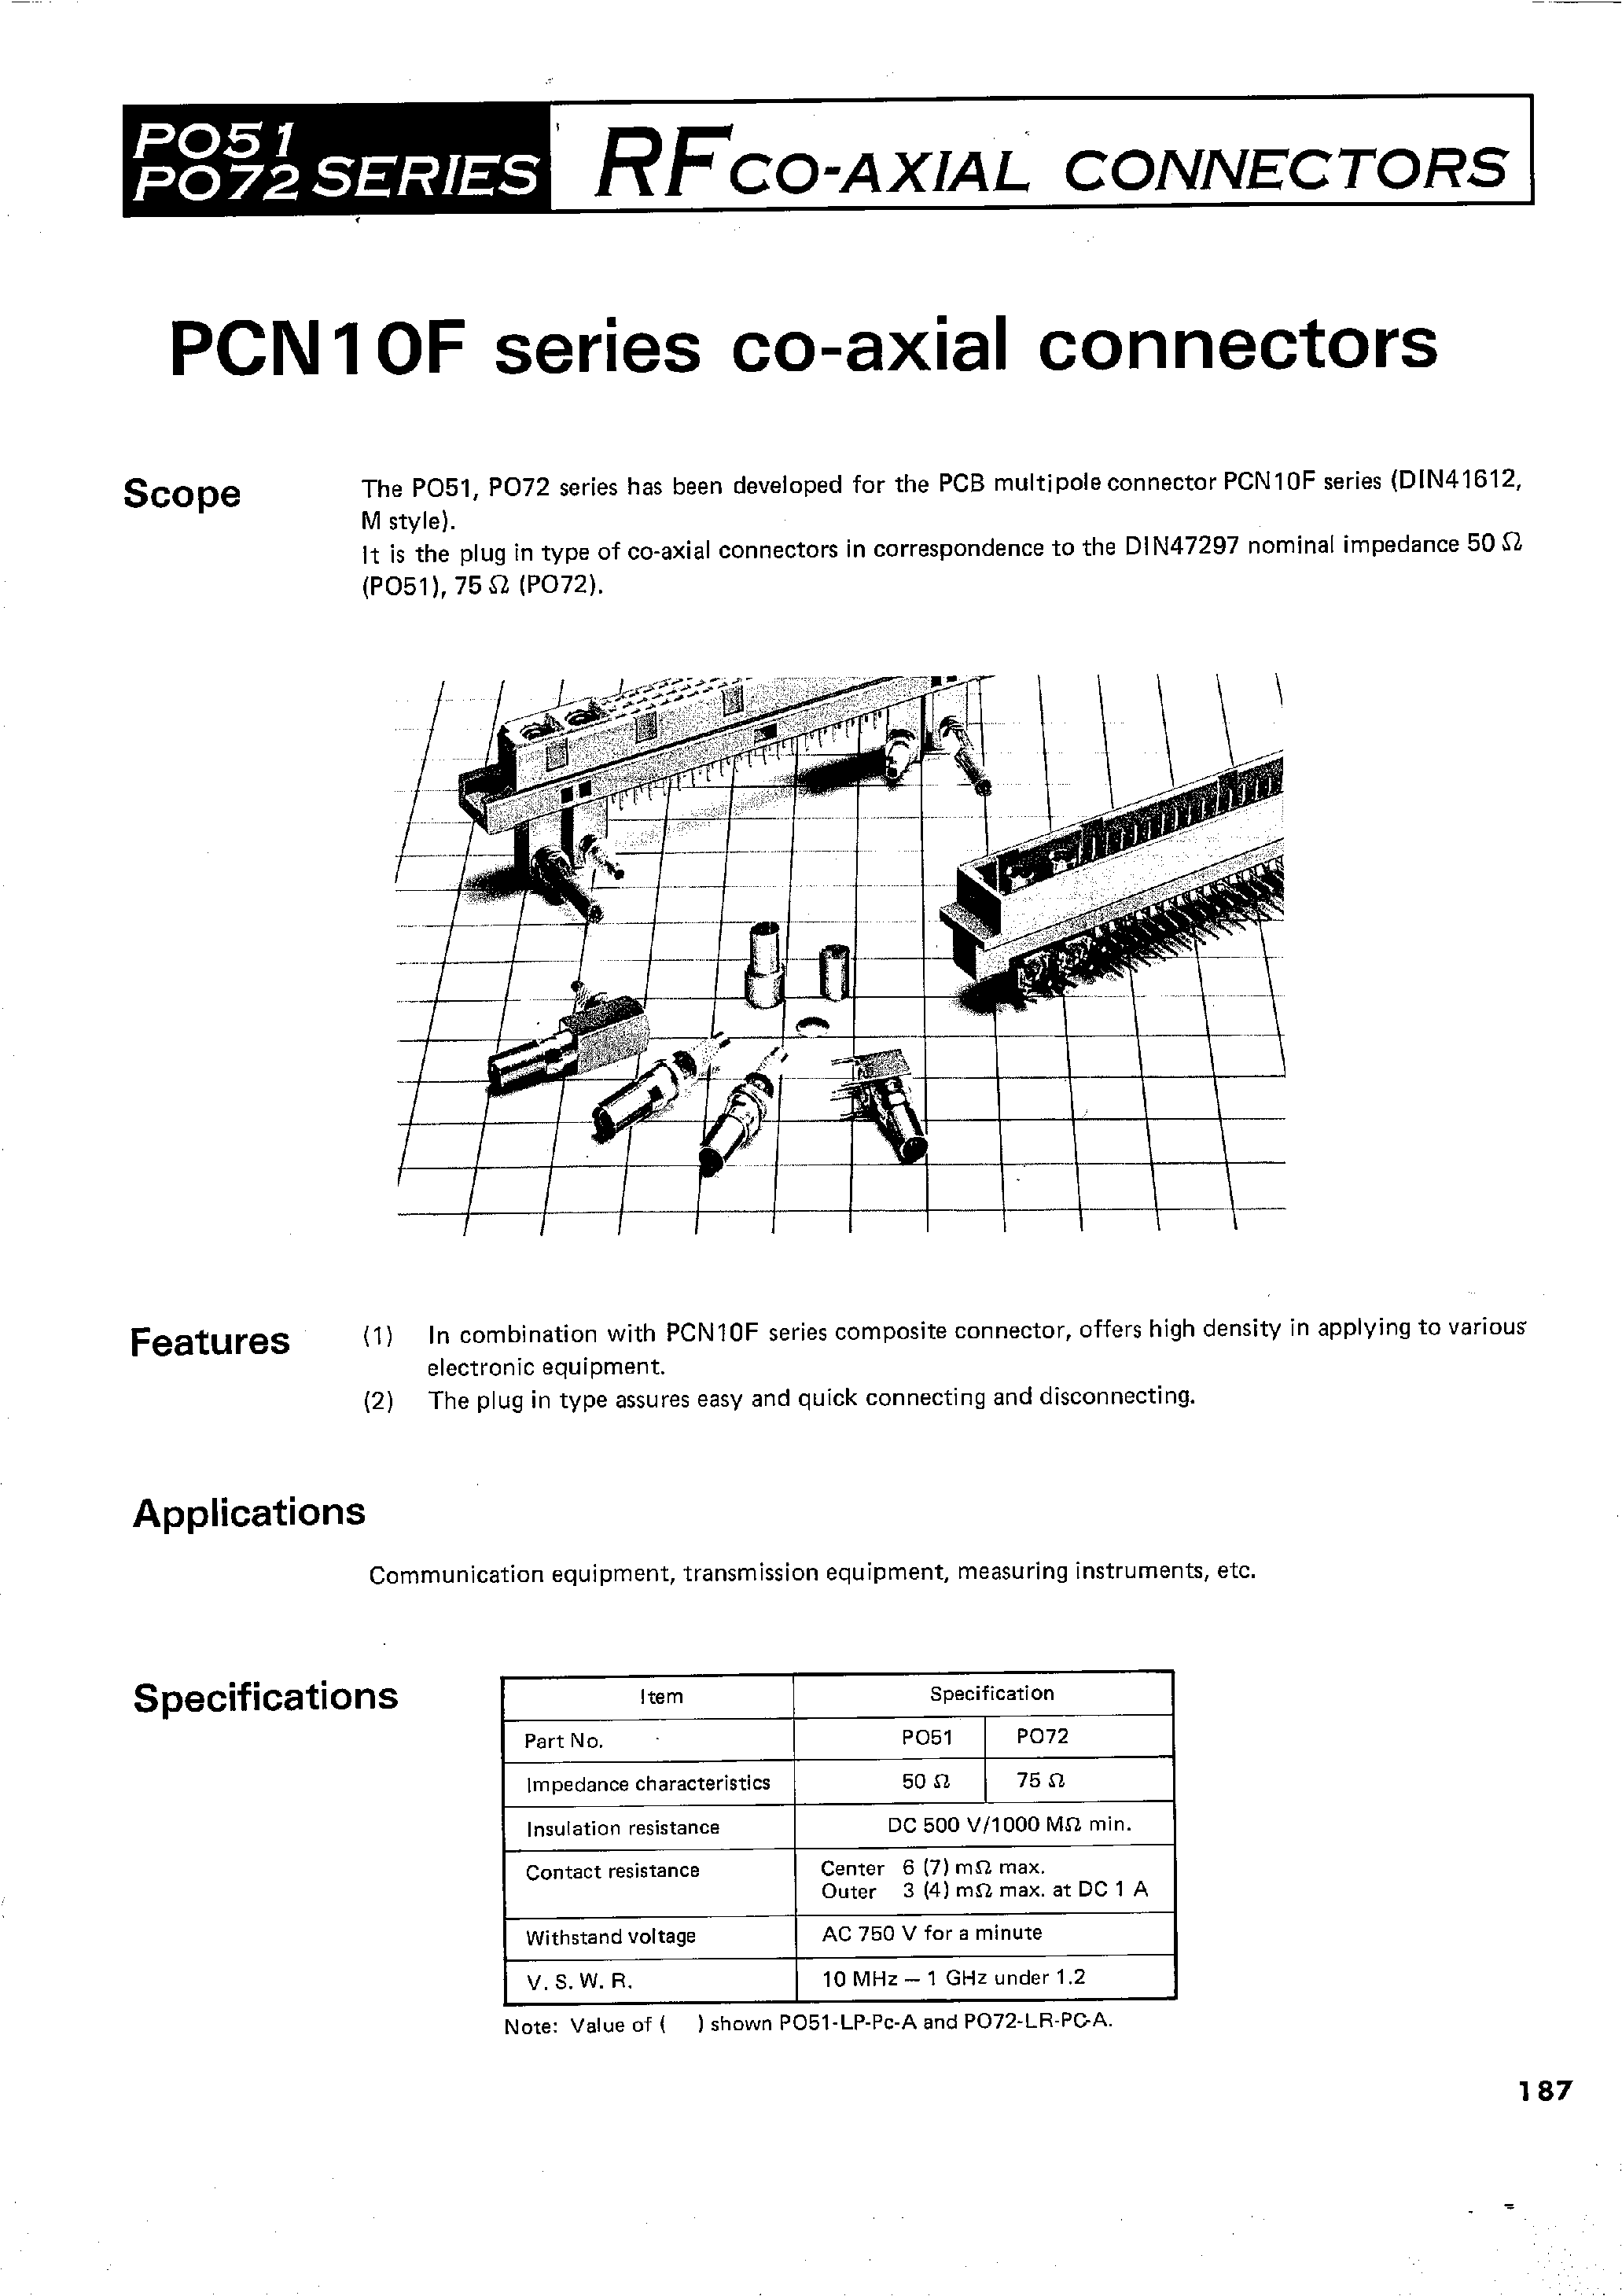 Даташит PO72-P-1.5C-1A - RFCO-AXIAL CONNECTORS страница 1